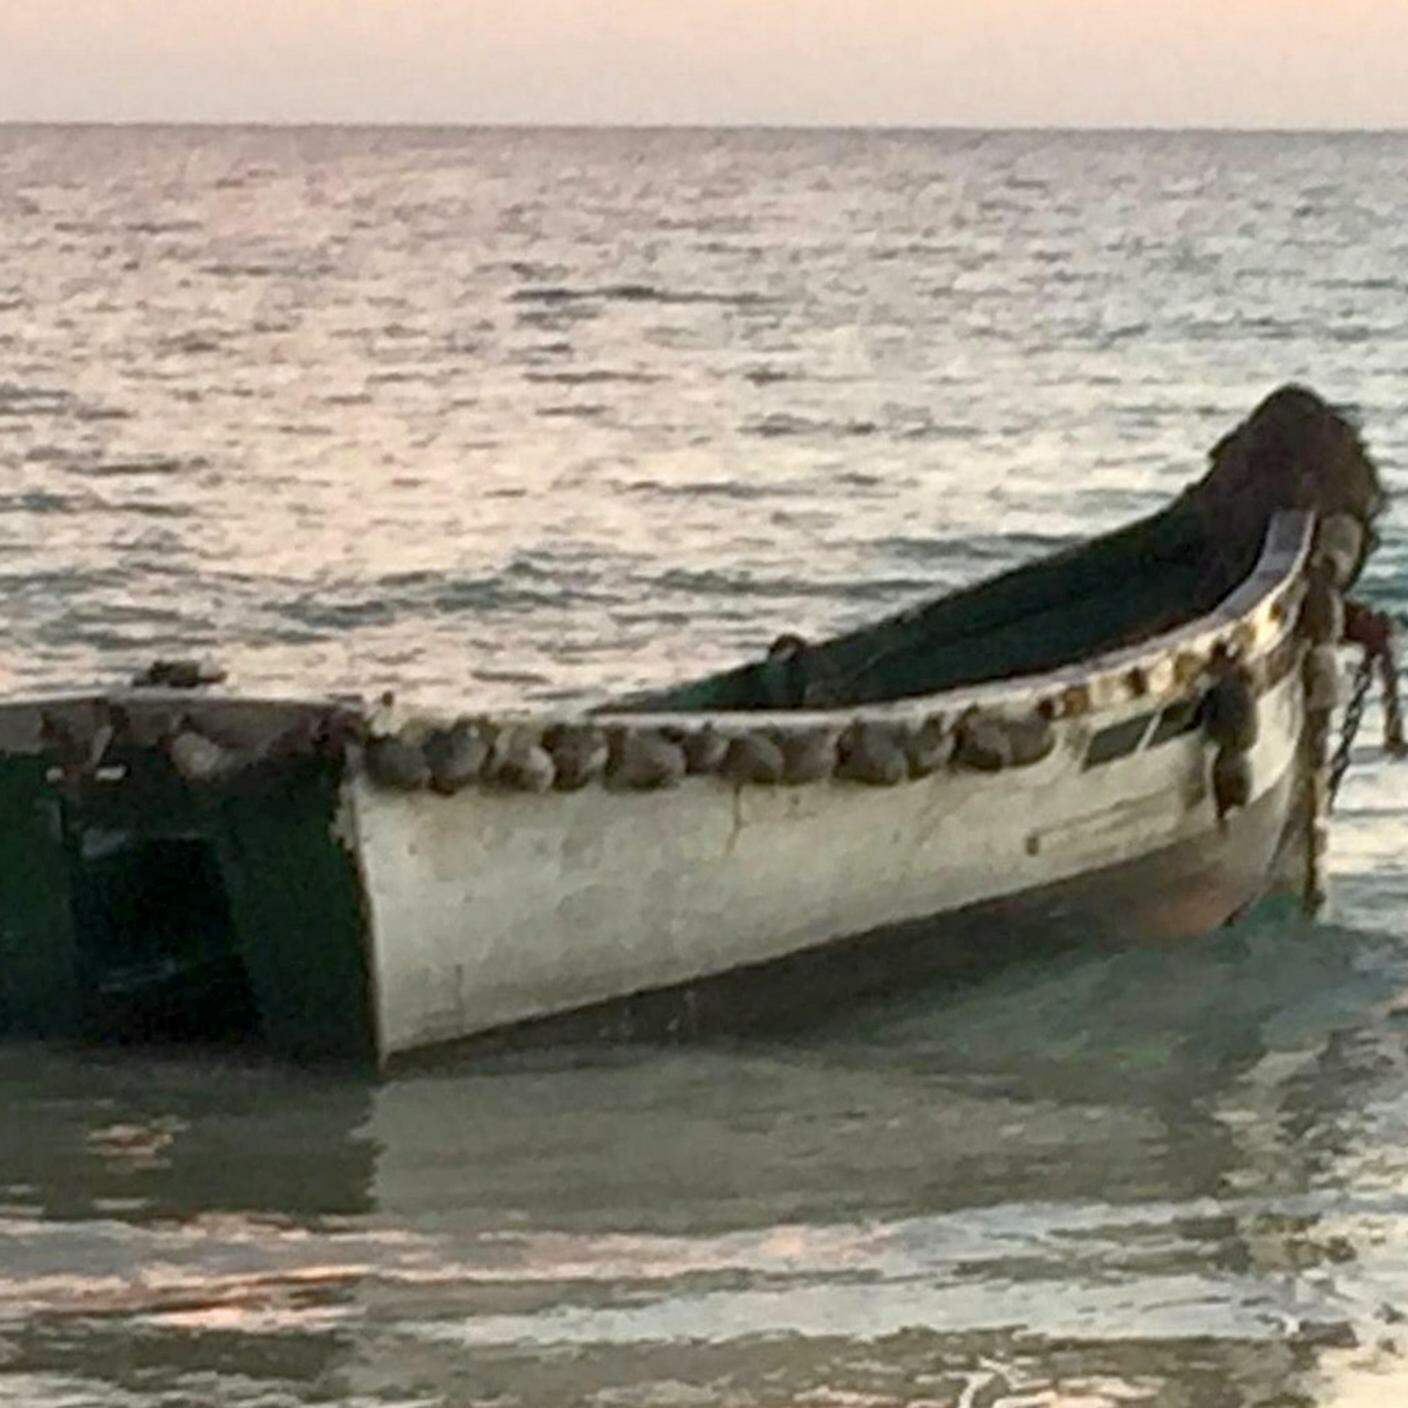 Un barcone giunto a Fuerteventura con 7 migranti a bordo